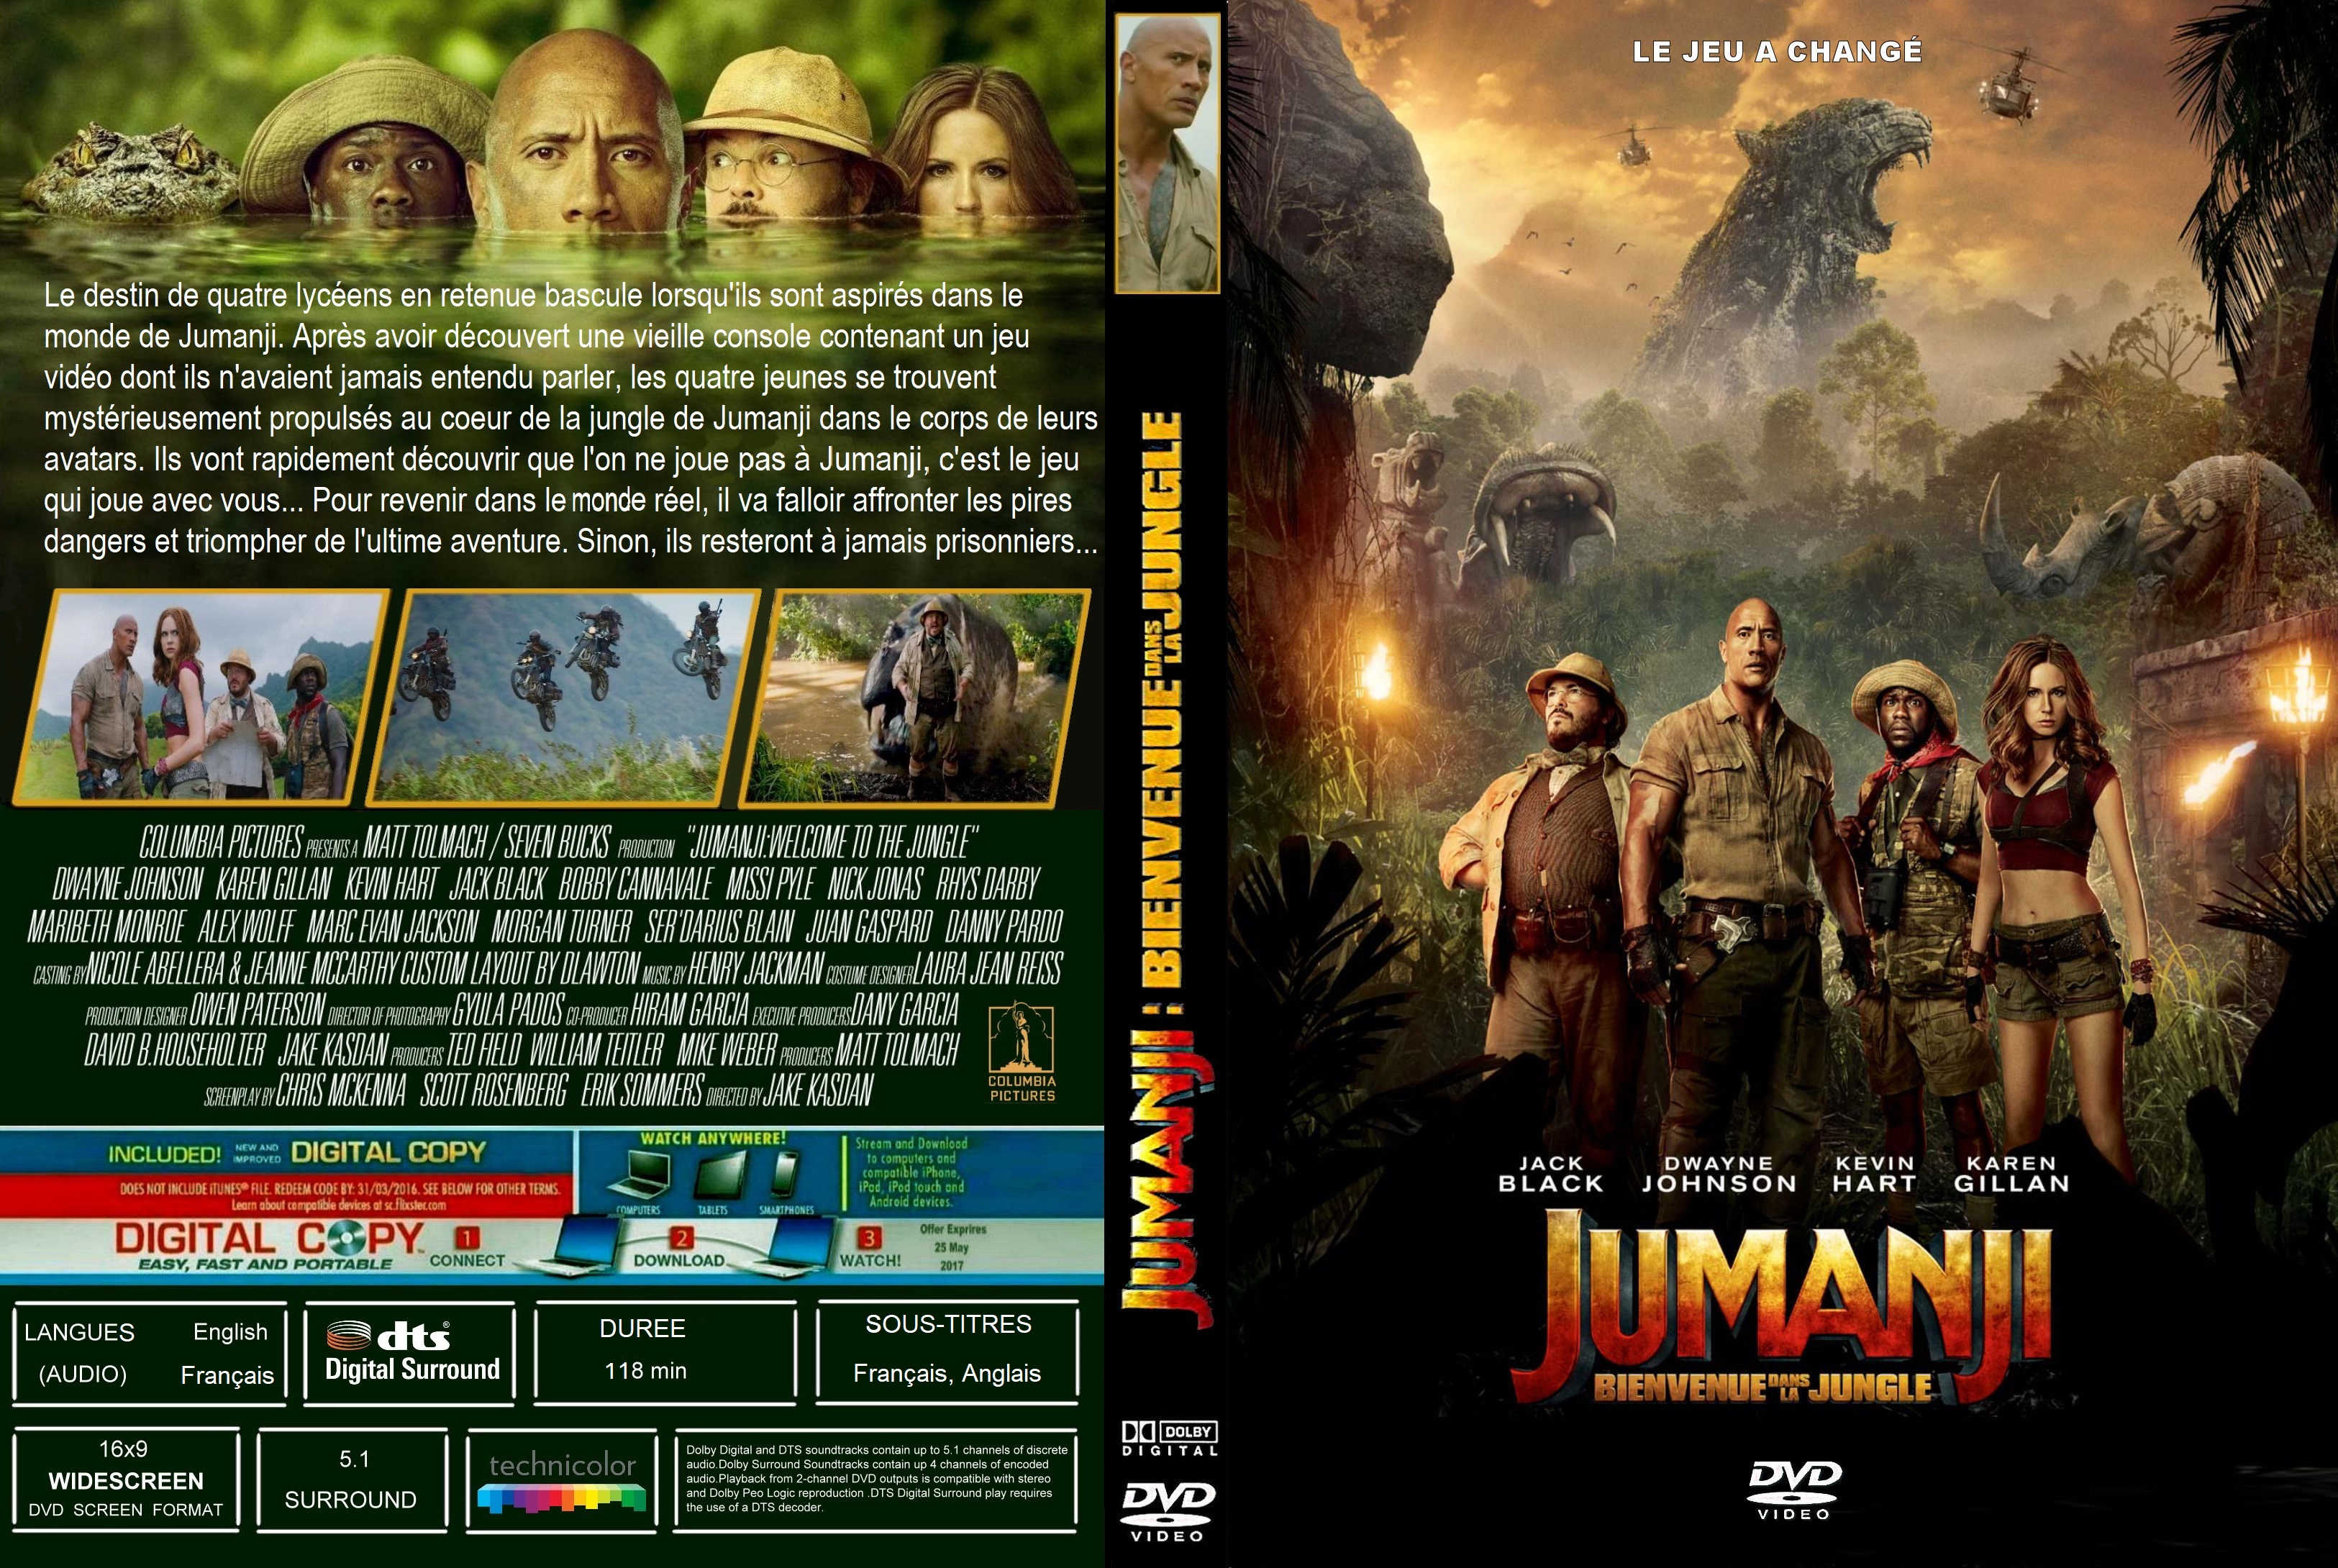 Jaquette DVD Jumanji bienvenue dans la jungle custom